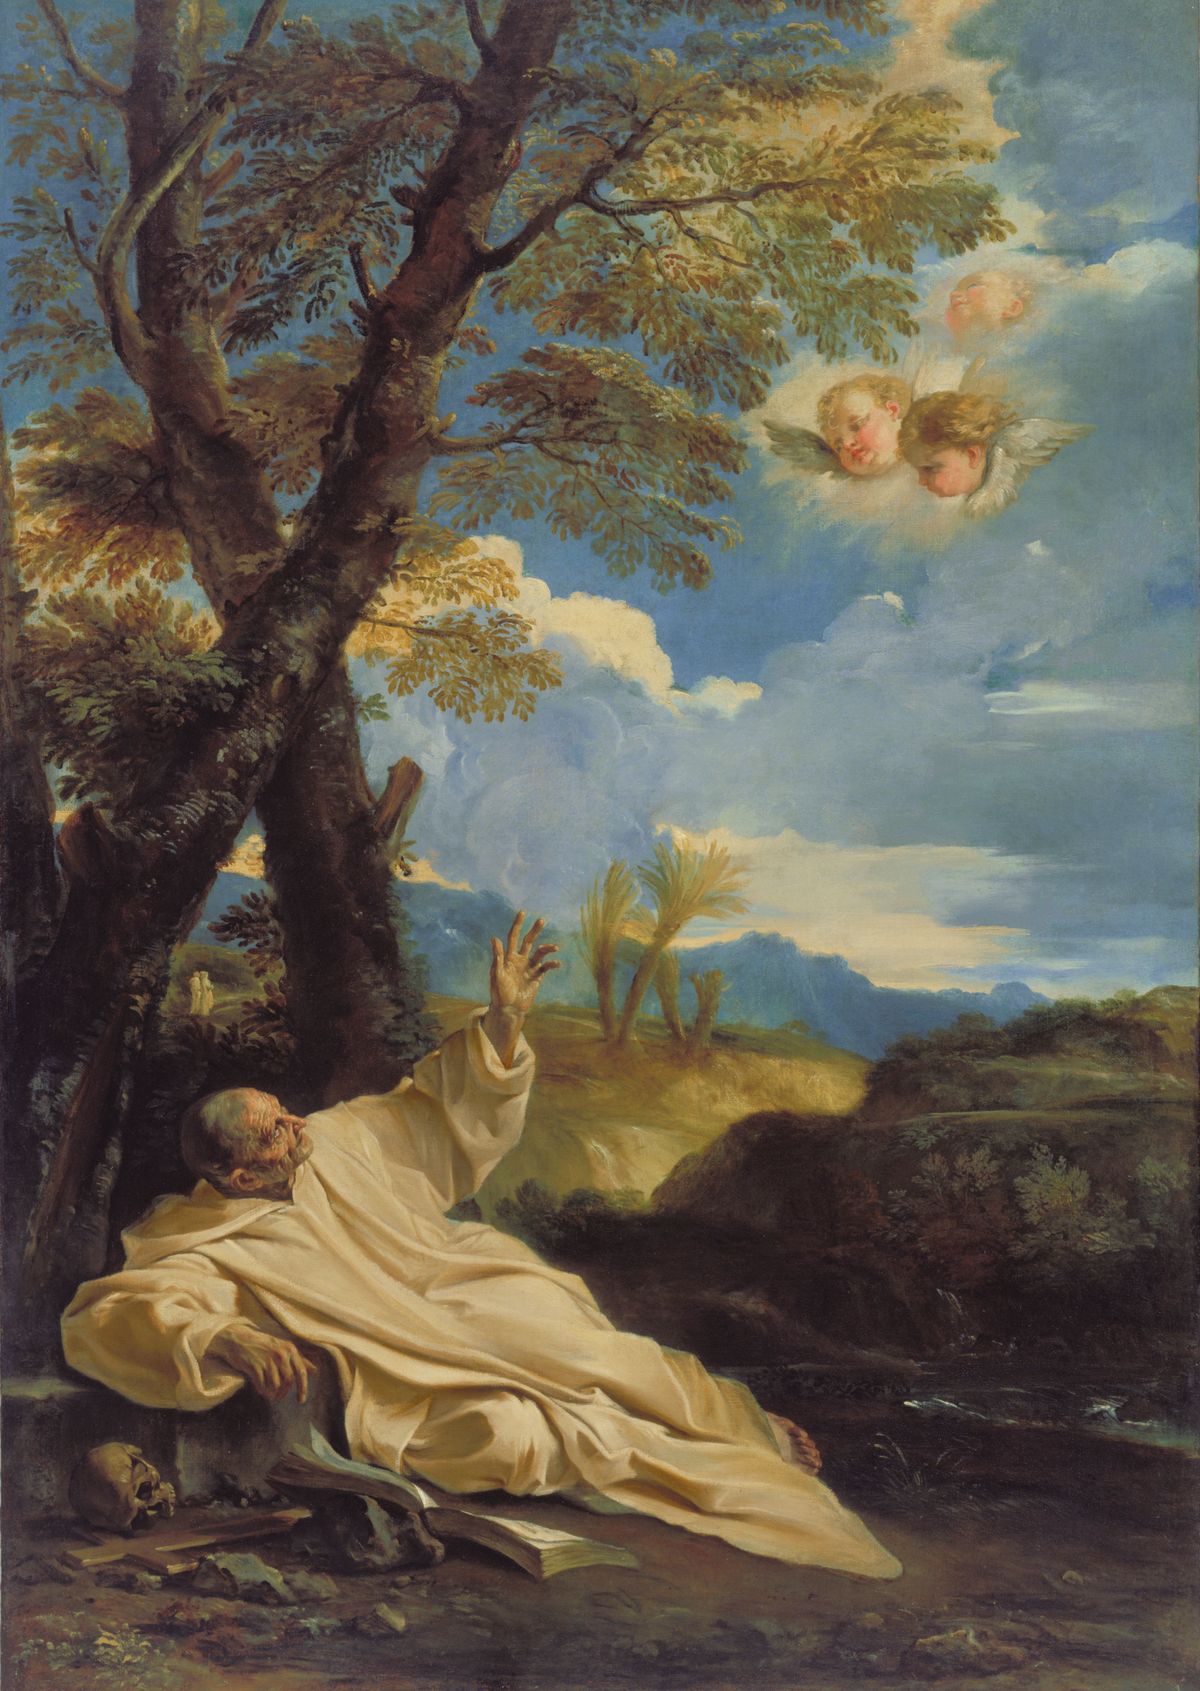 The Vision of Saint Bruno by Pier Francesco Mola (1660) - Public Domain Catholic Painting